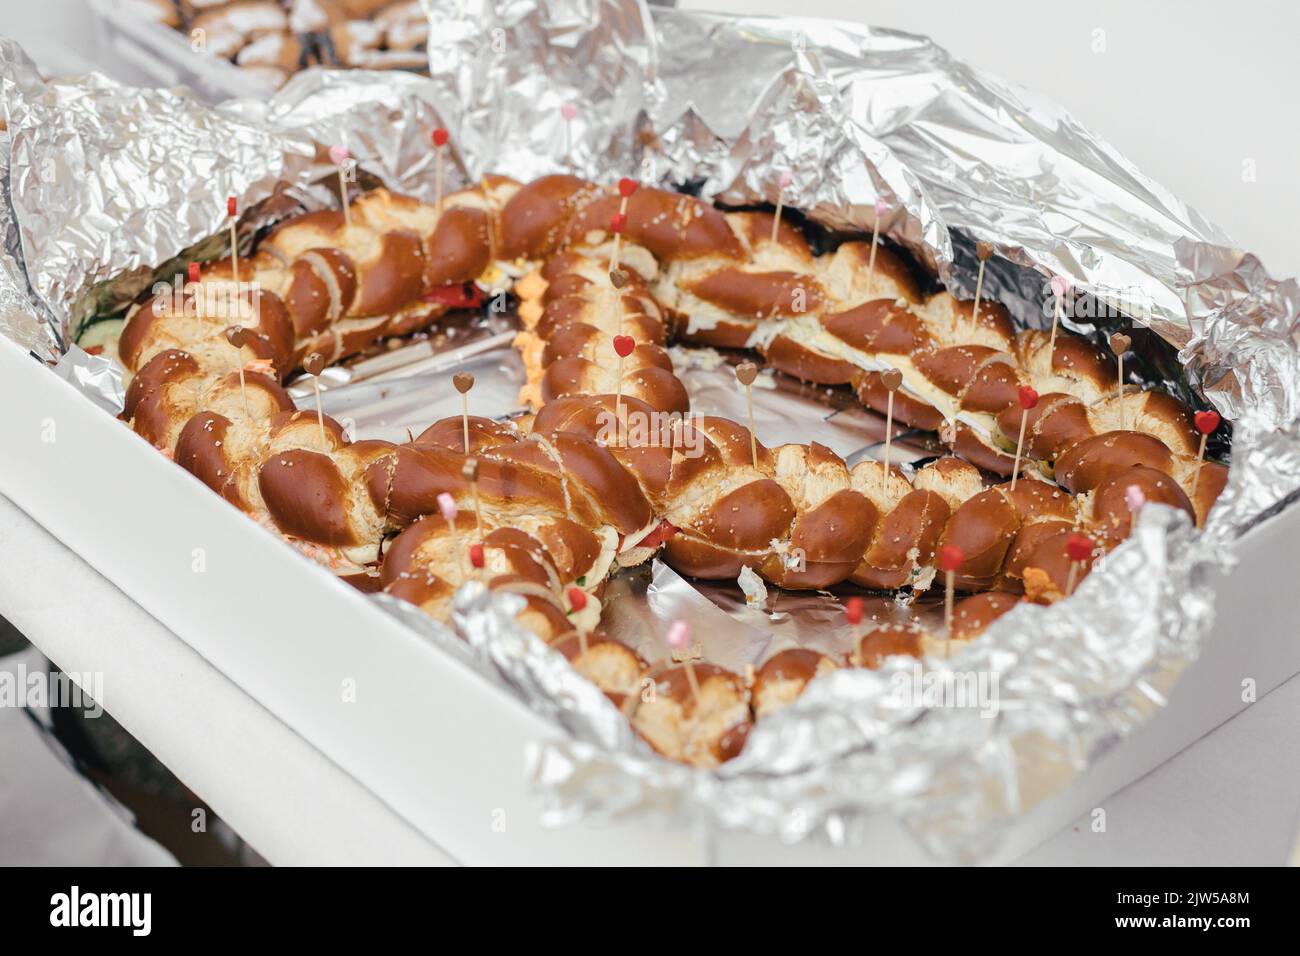 Giant pretzel at a wedding buffet in Bavaria Stock Photo